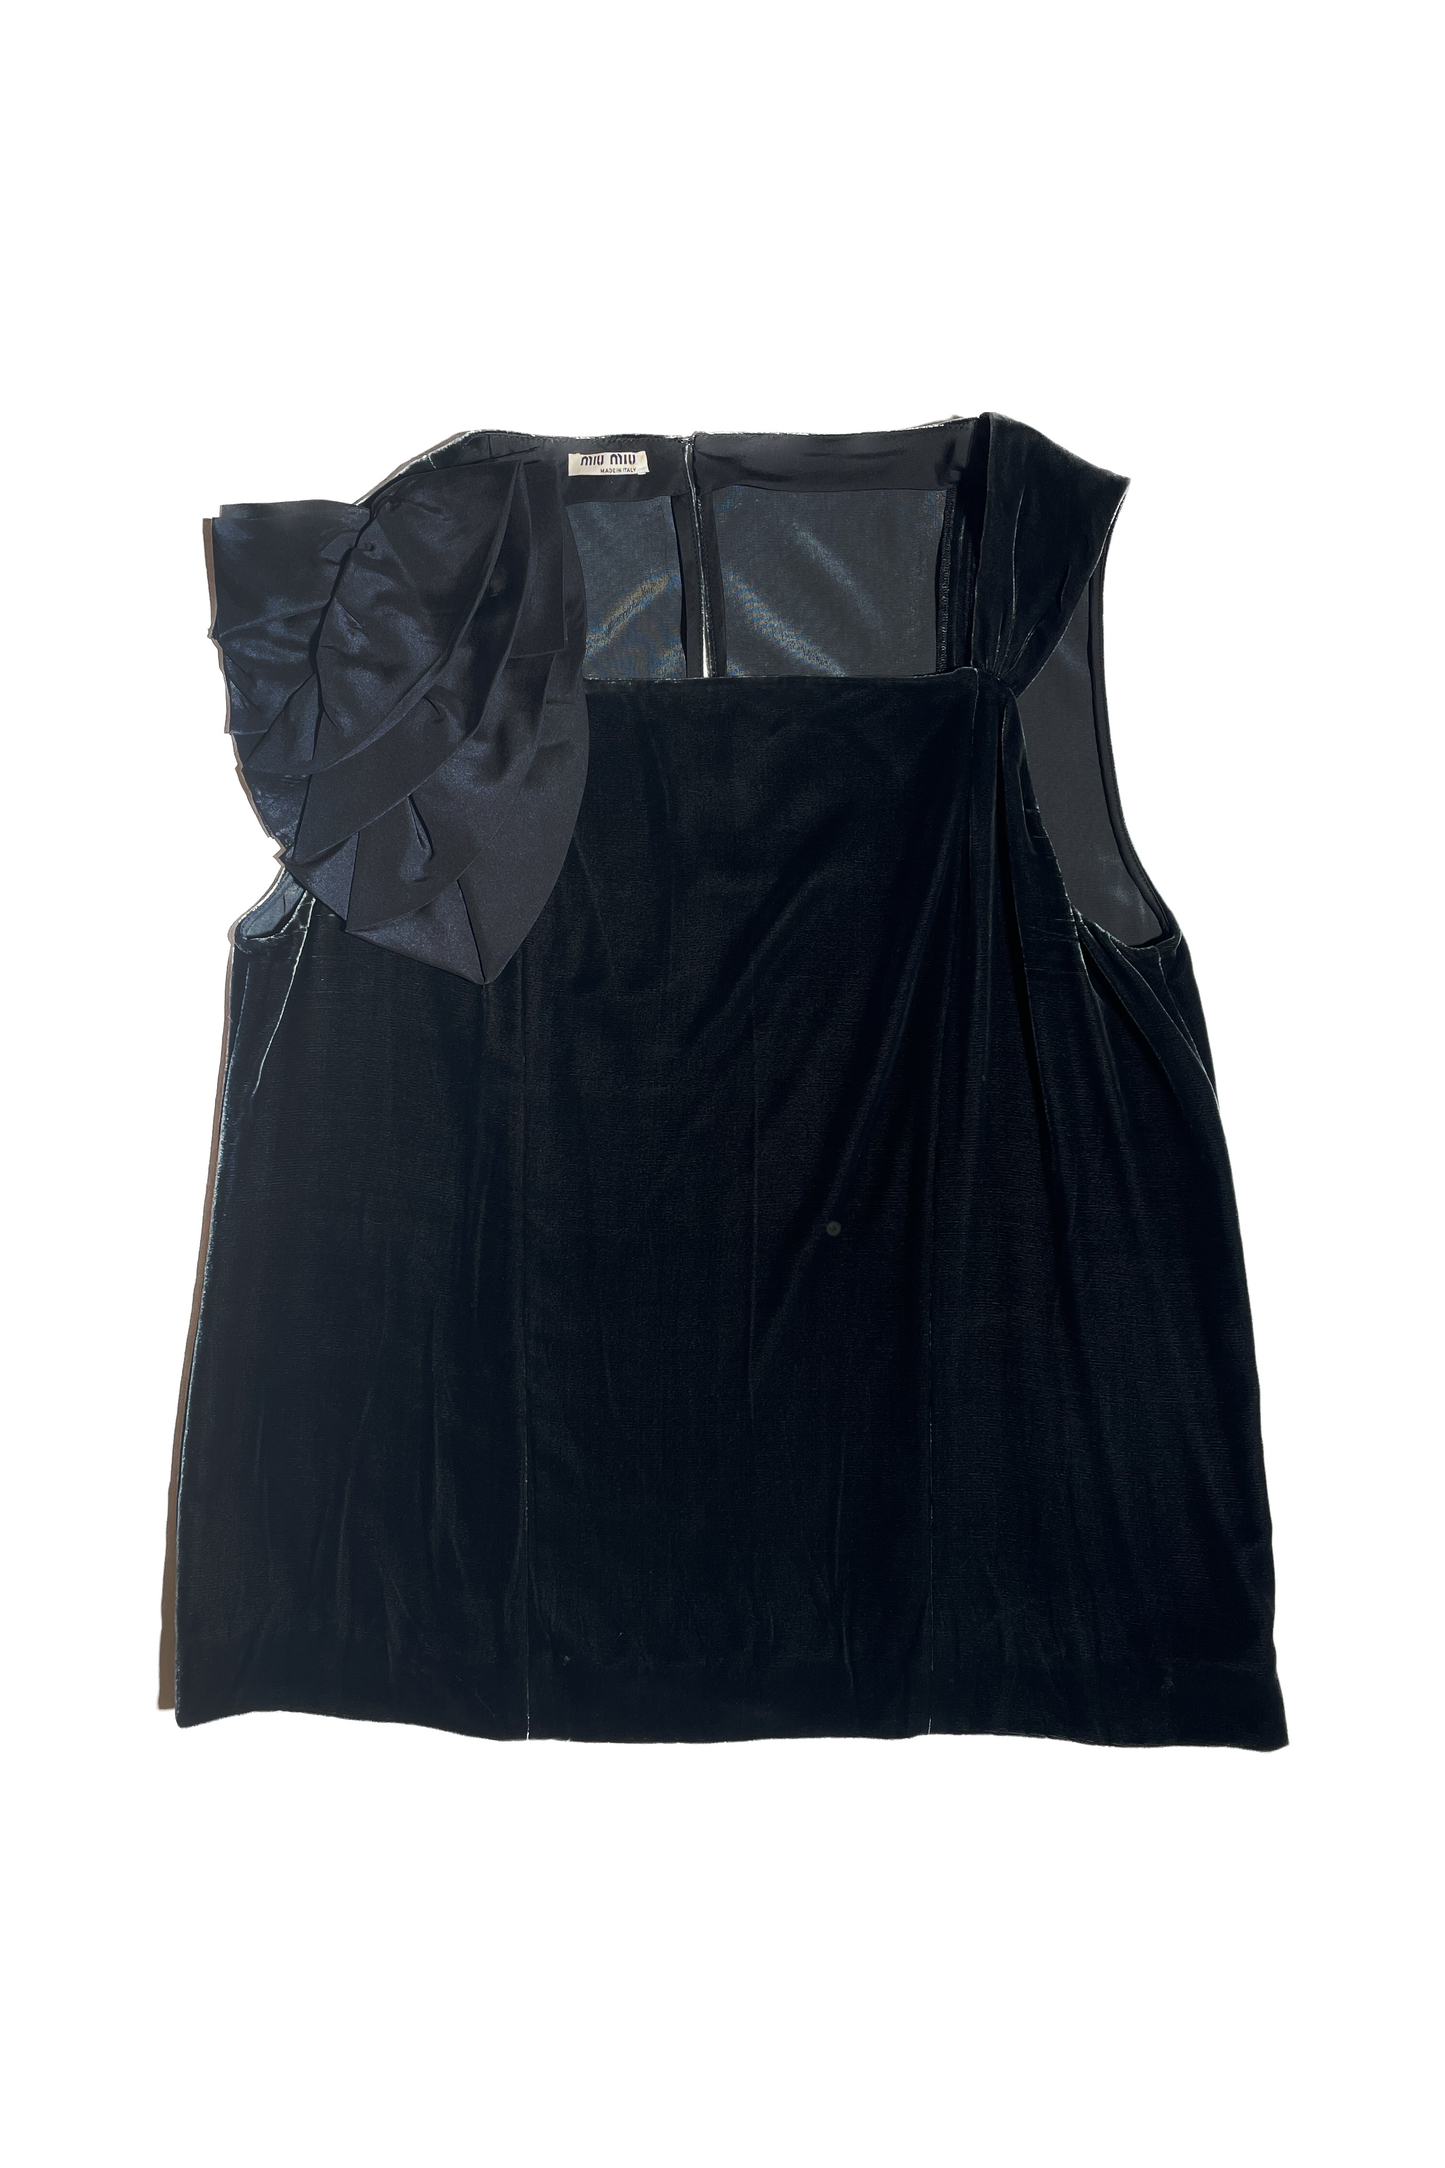 Miu Miu - Velvet Skirt Suit w/ Bows